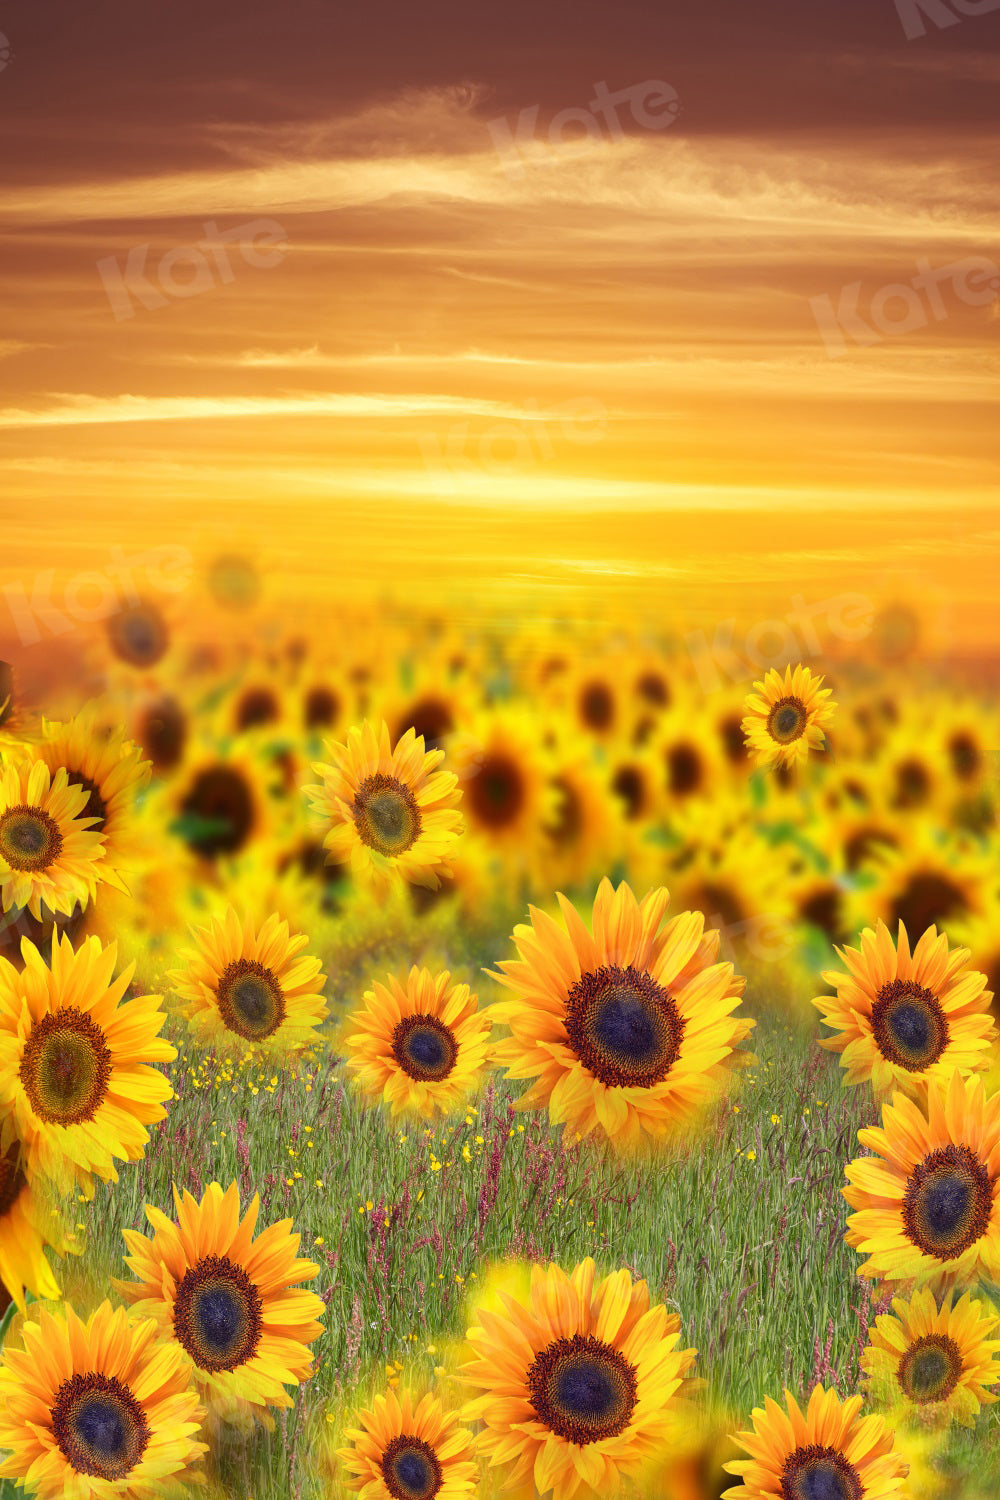 Kate Summer Backdrop Sunflower Sunset for Photography